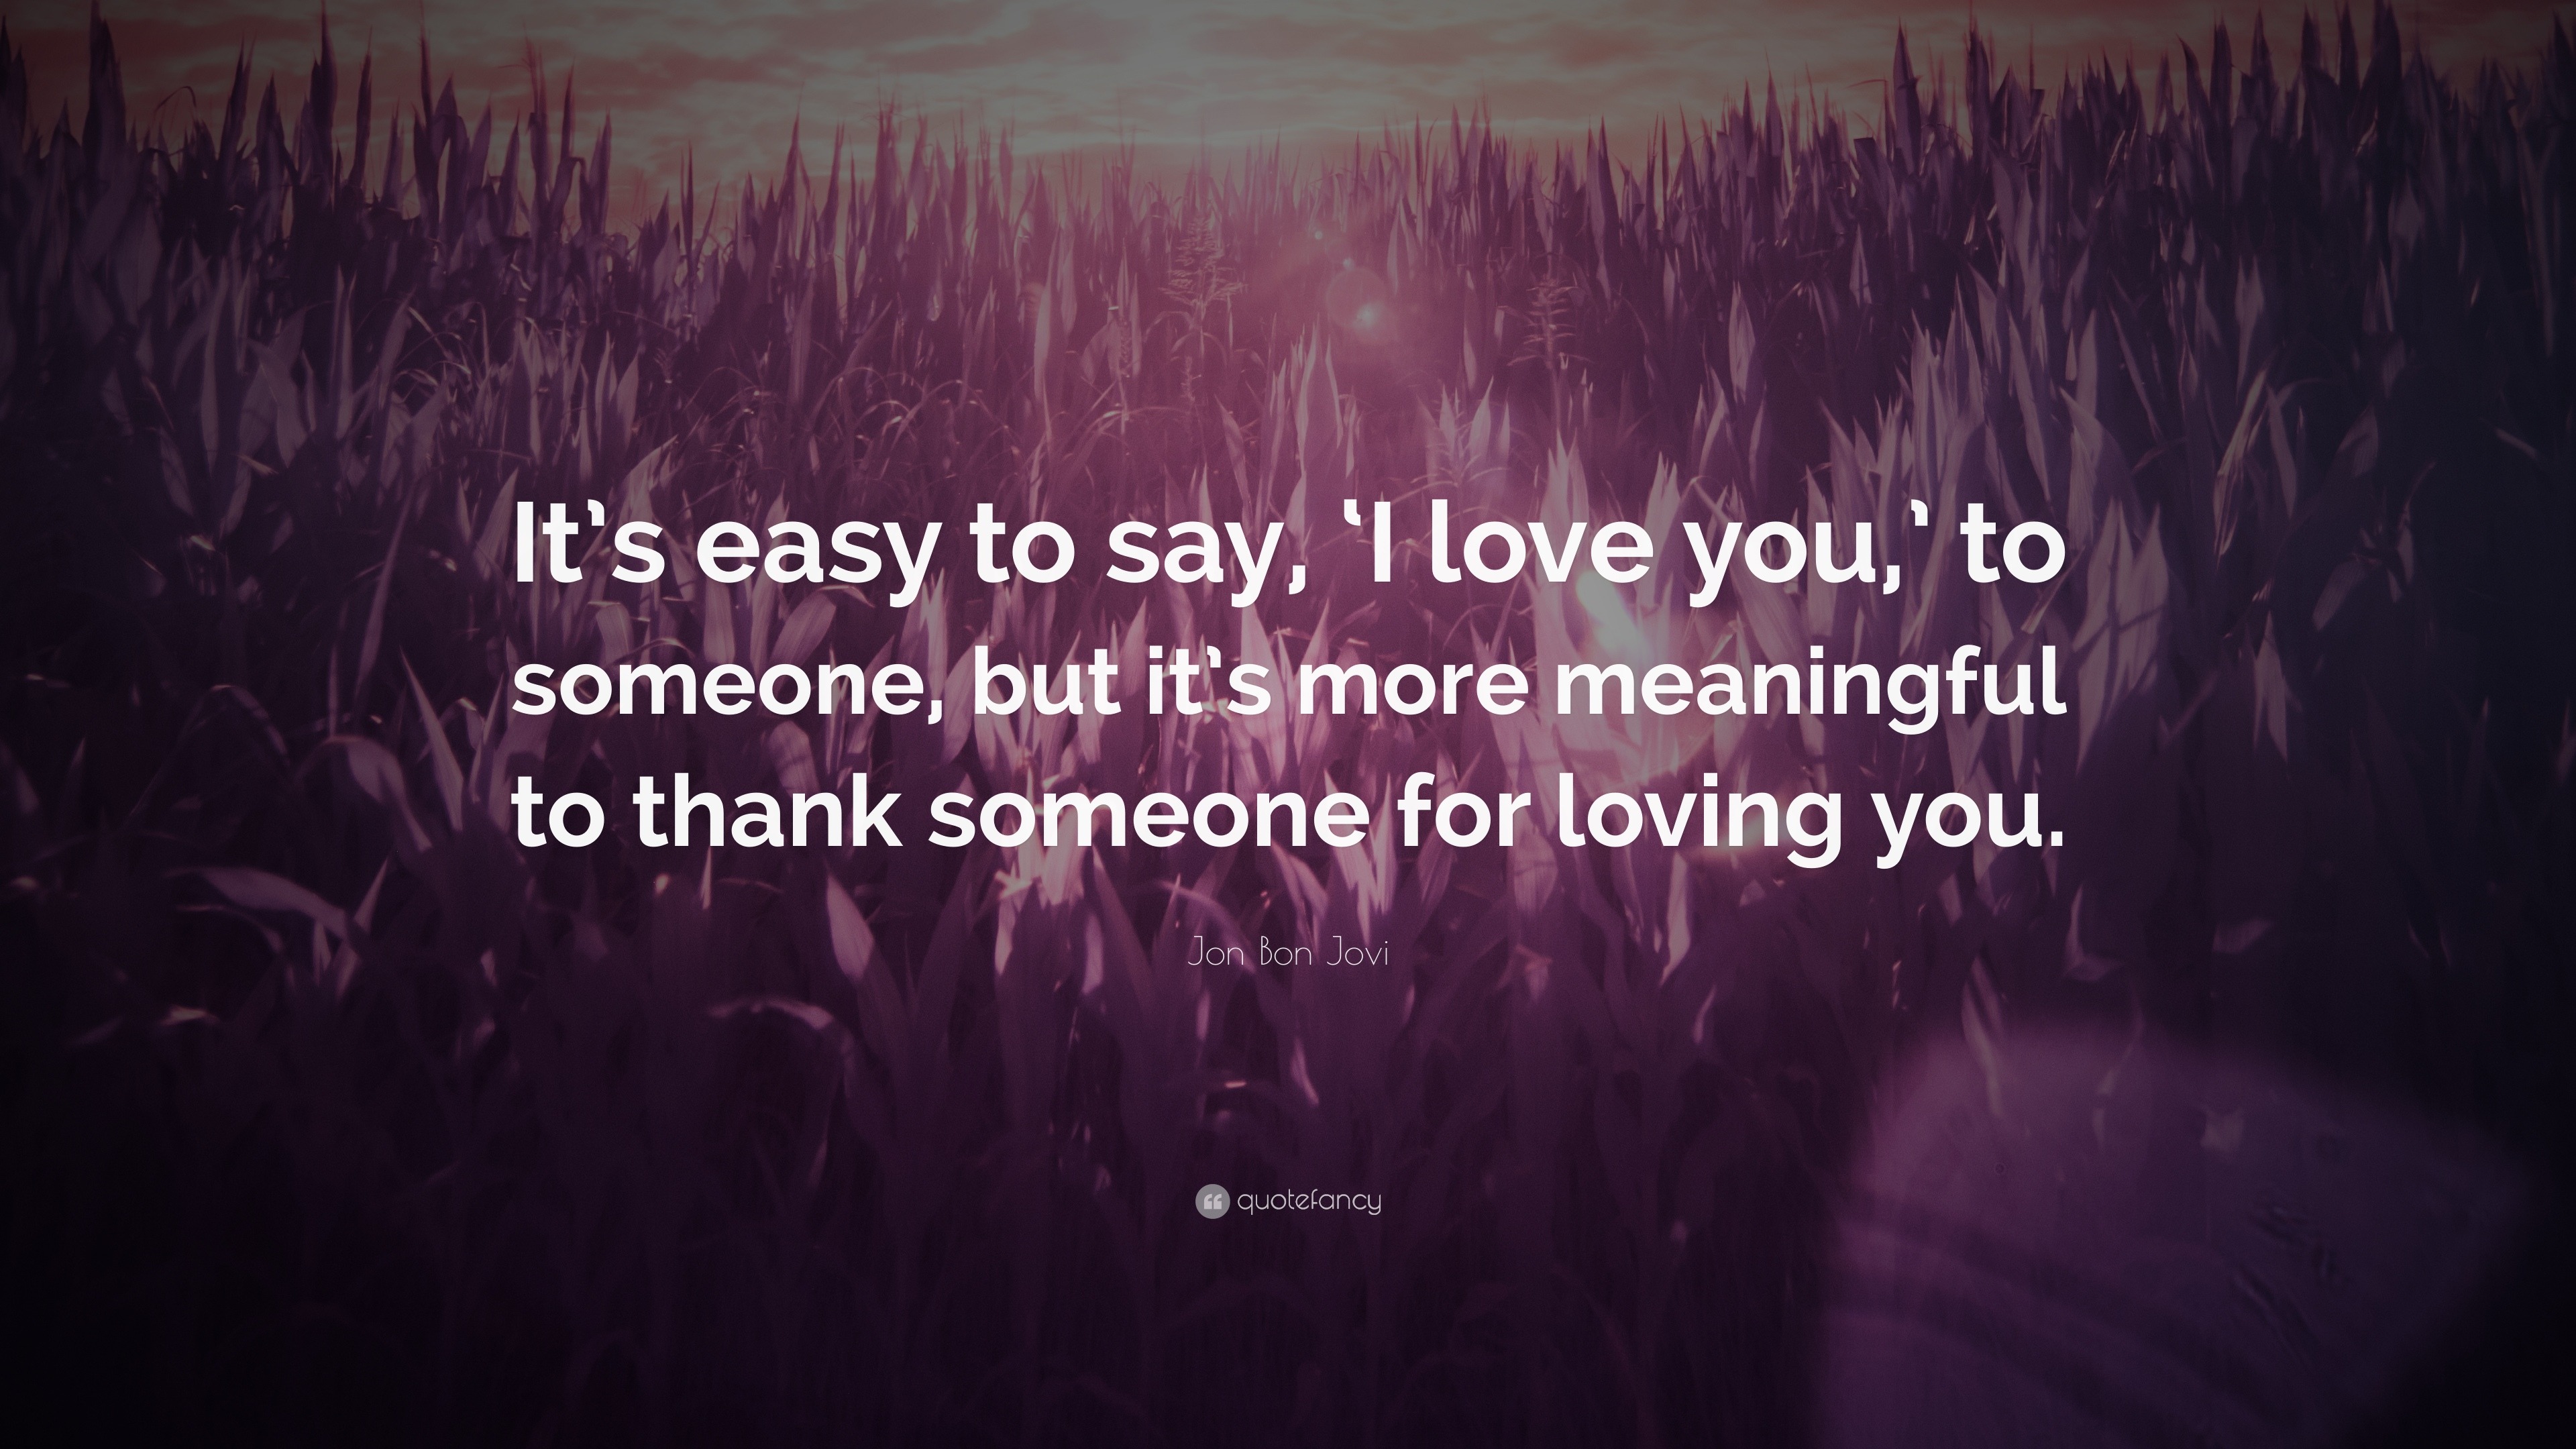 Jon Bon Jovi Quote “It s easy to say I love you